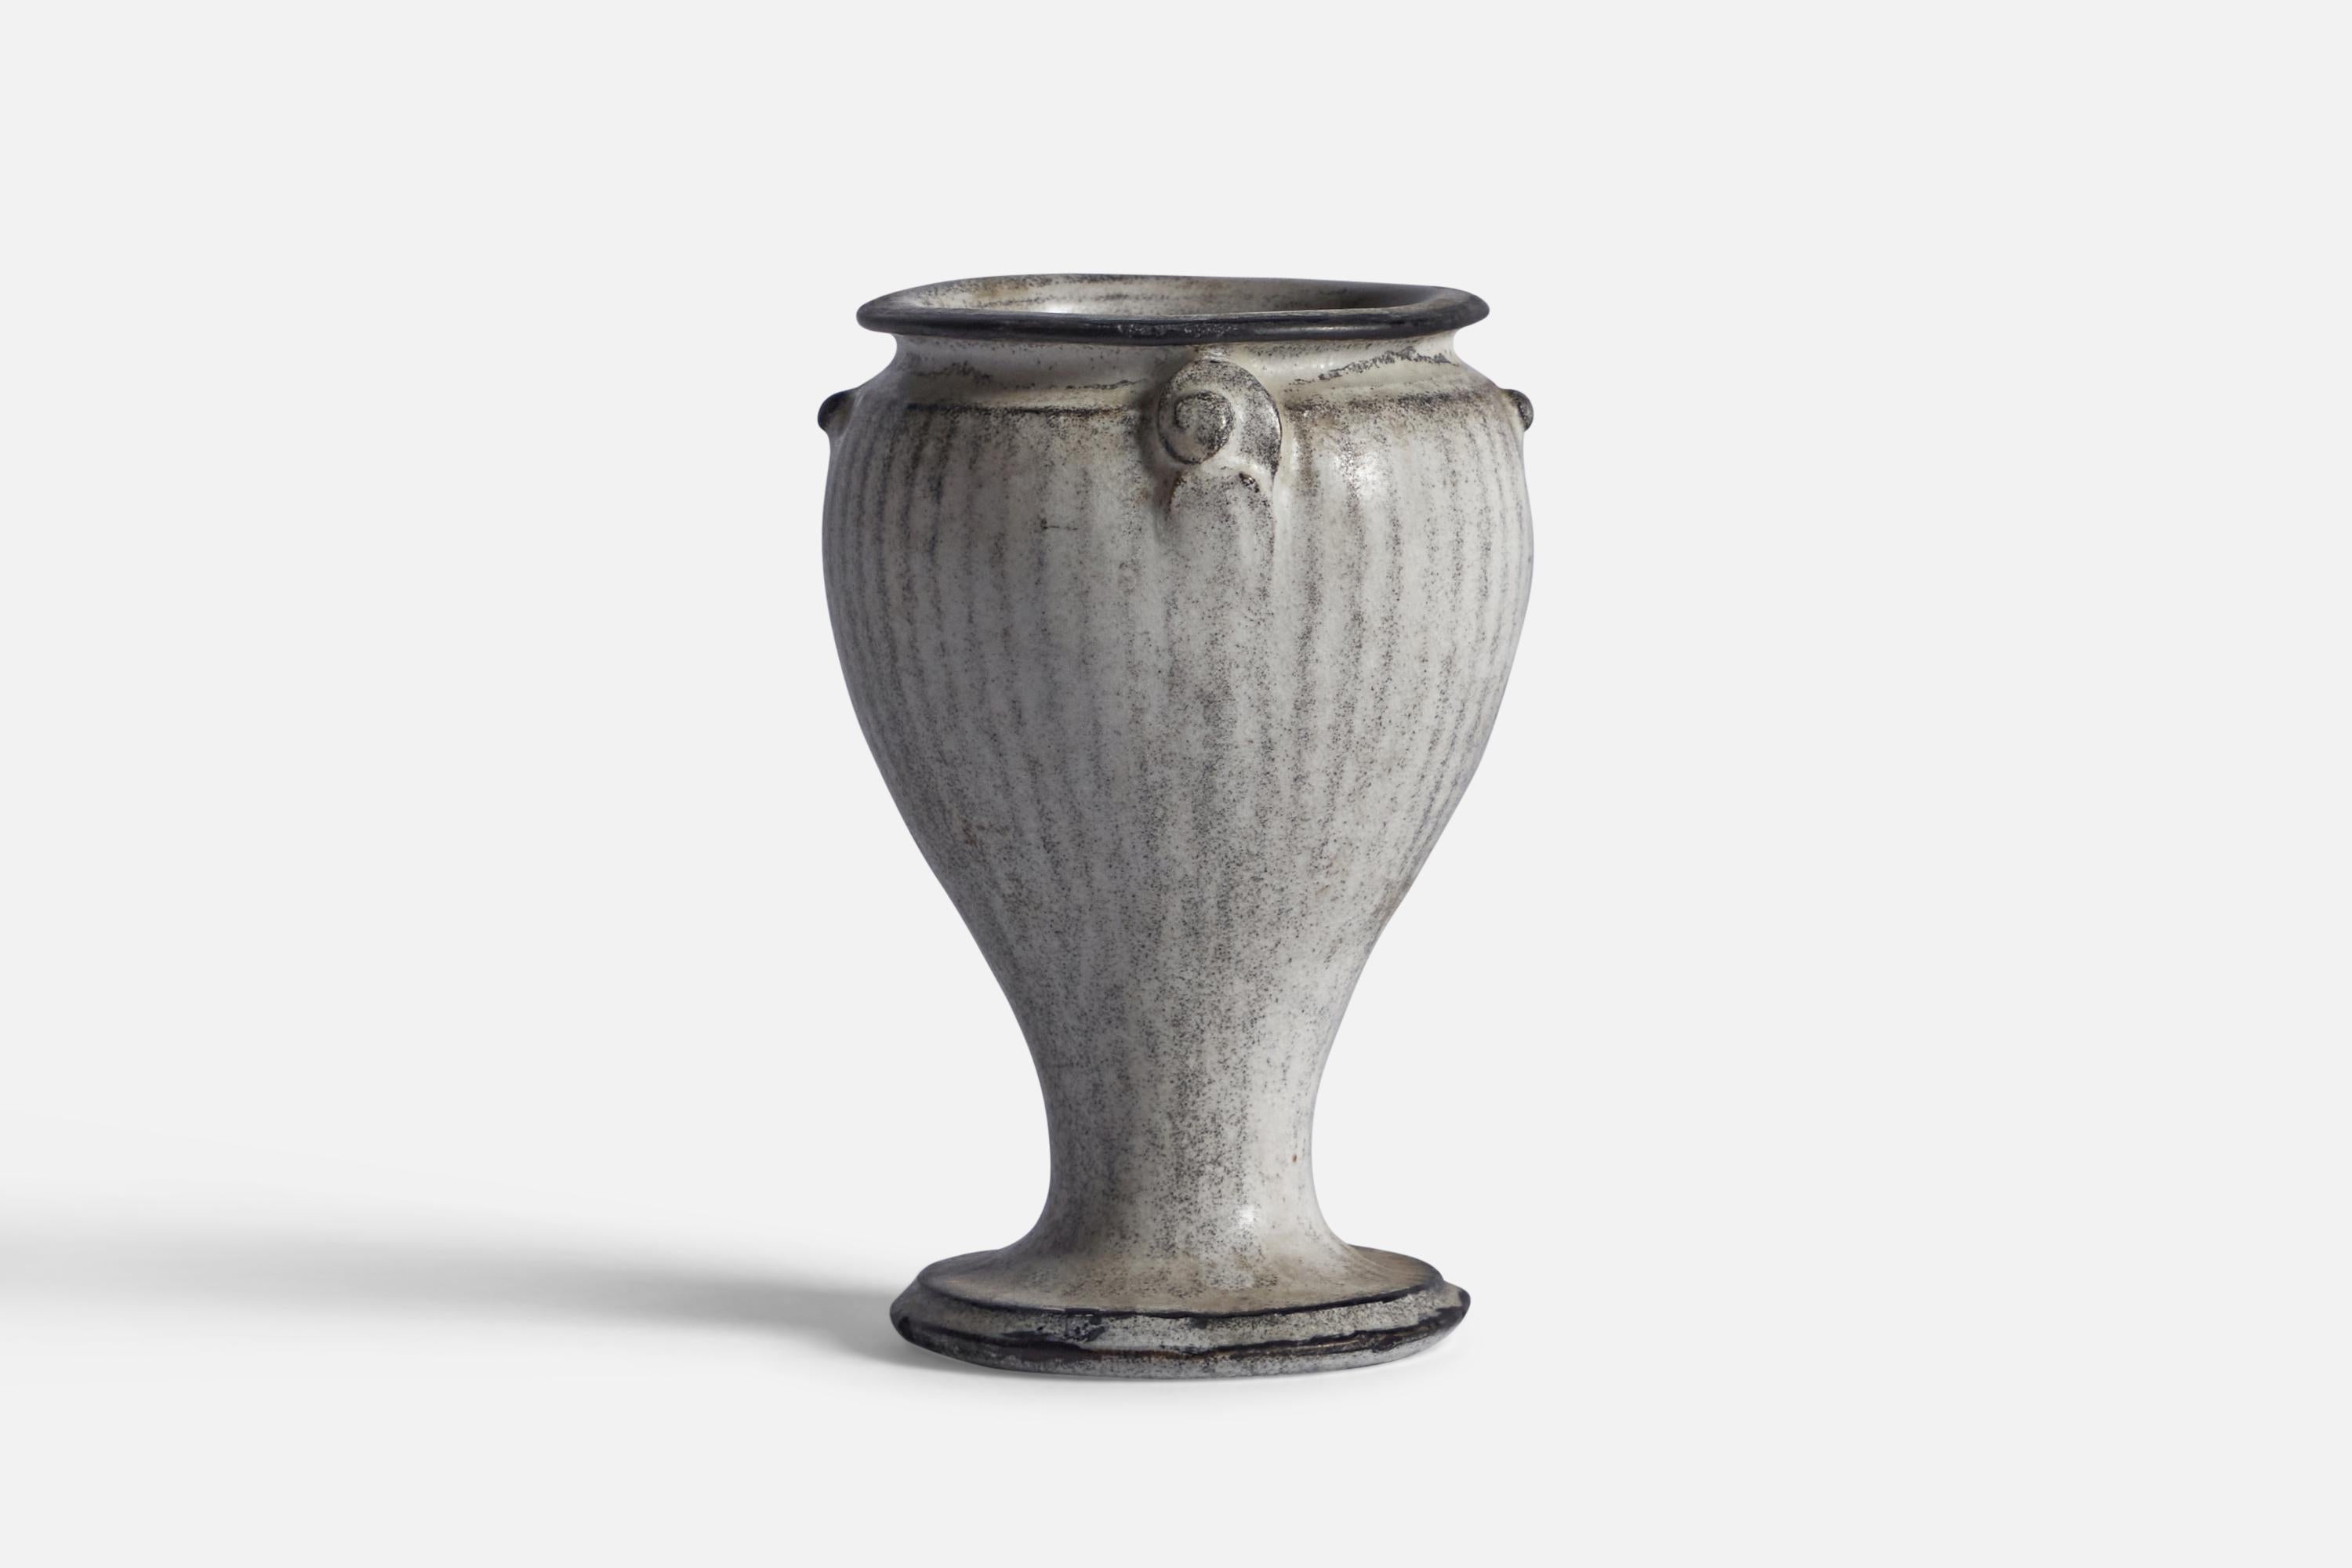 A black and grey-glazed earthenware vase designed by Svend Hammershøi and produced by Kähler, Denmark, 1930s.